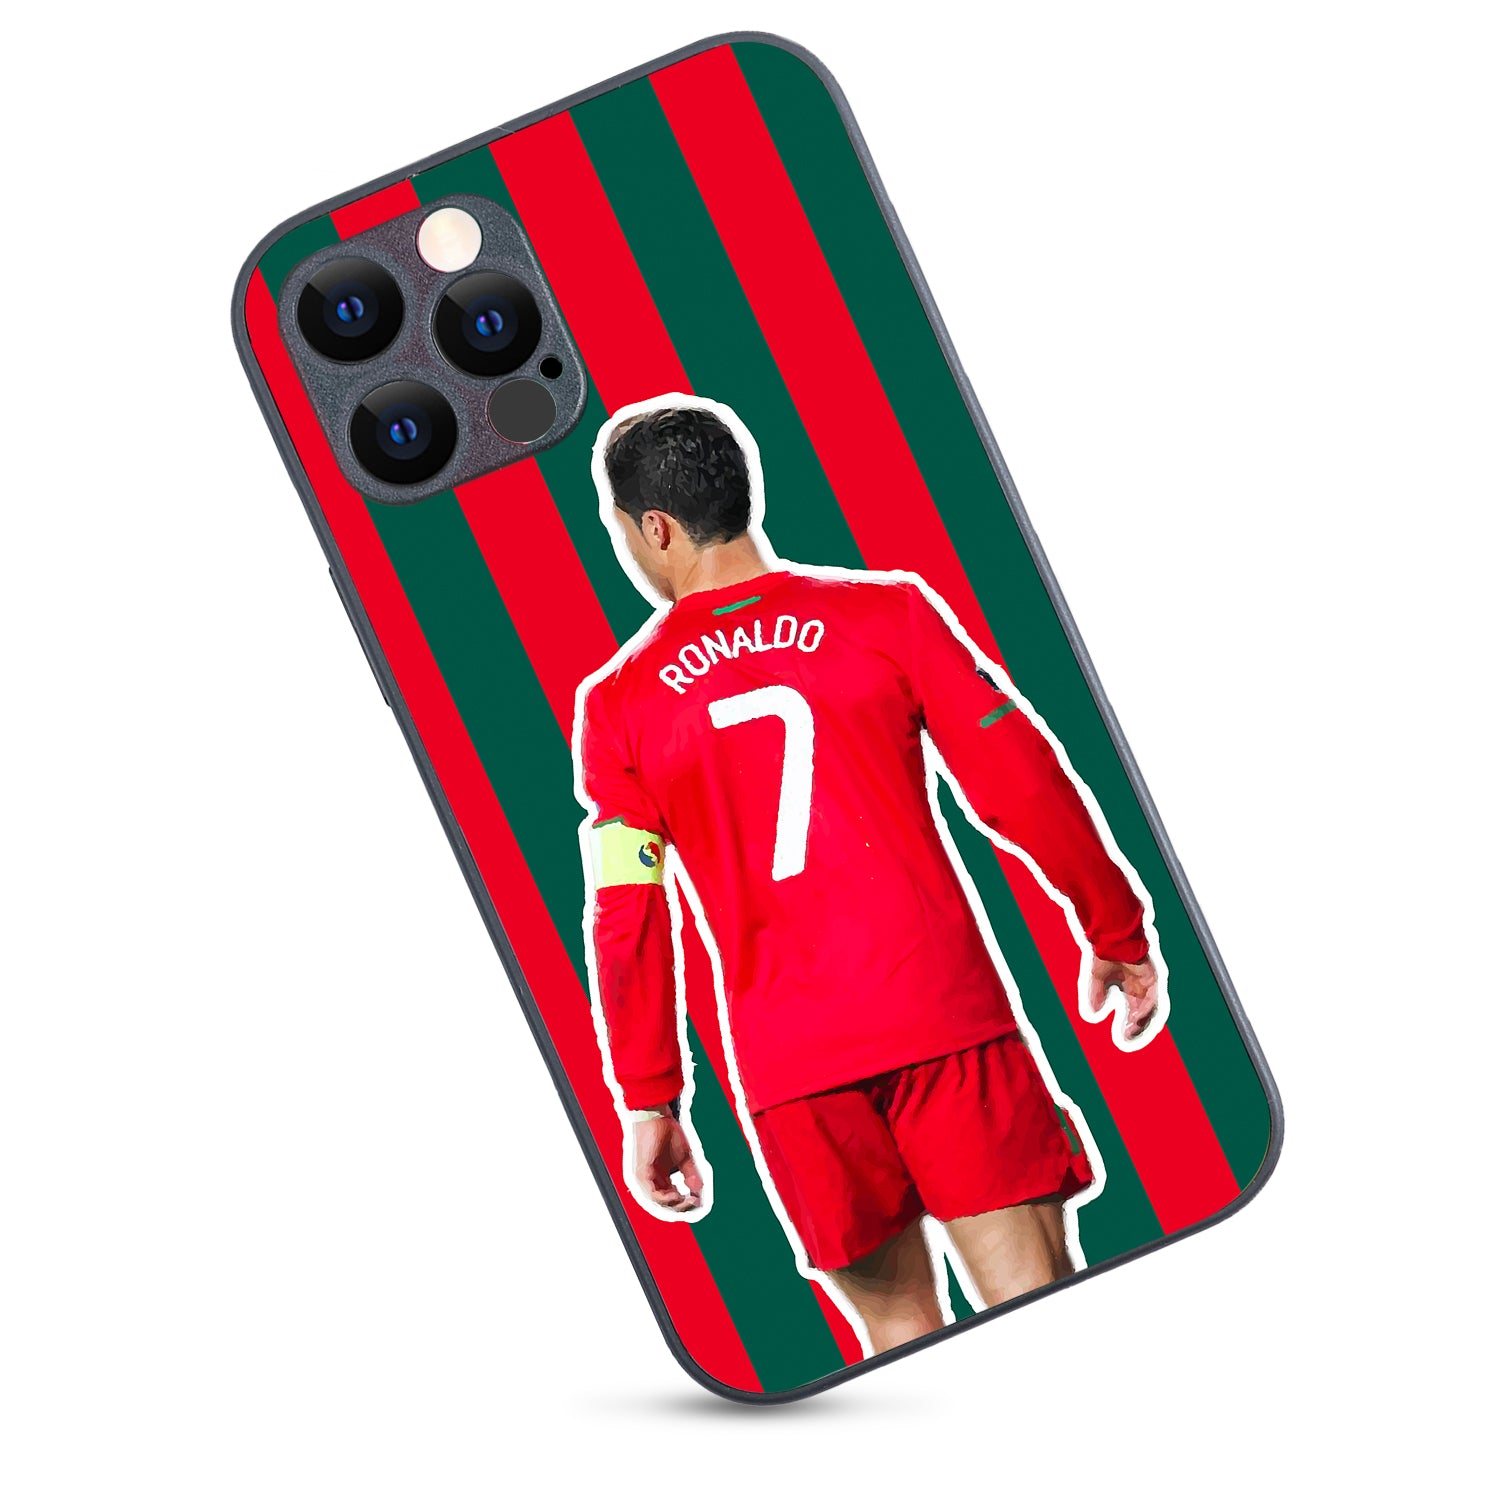 Ronaldo Sports Sports iPhone 12 Pro Case